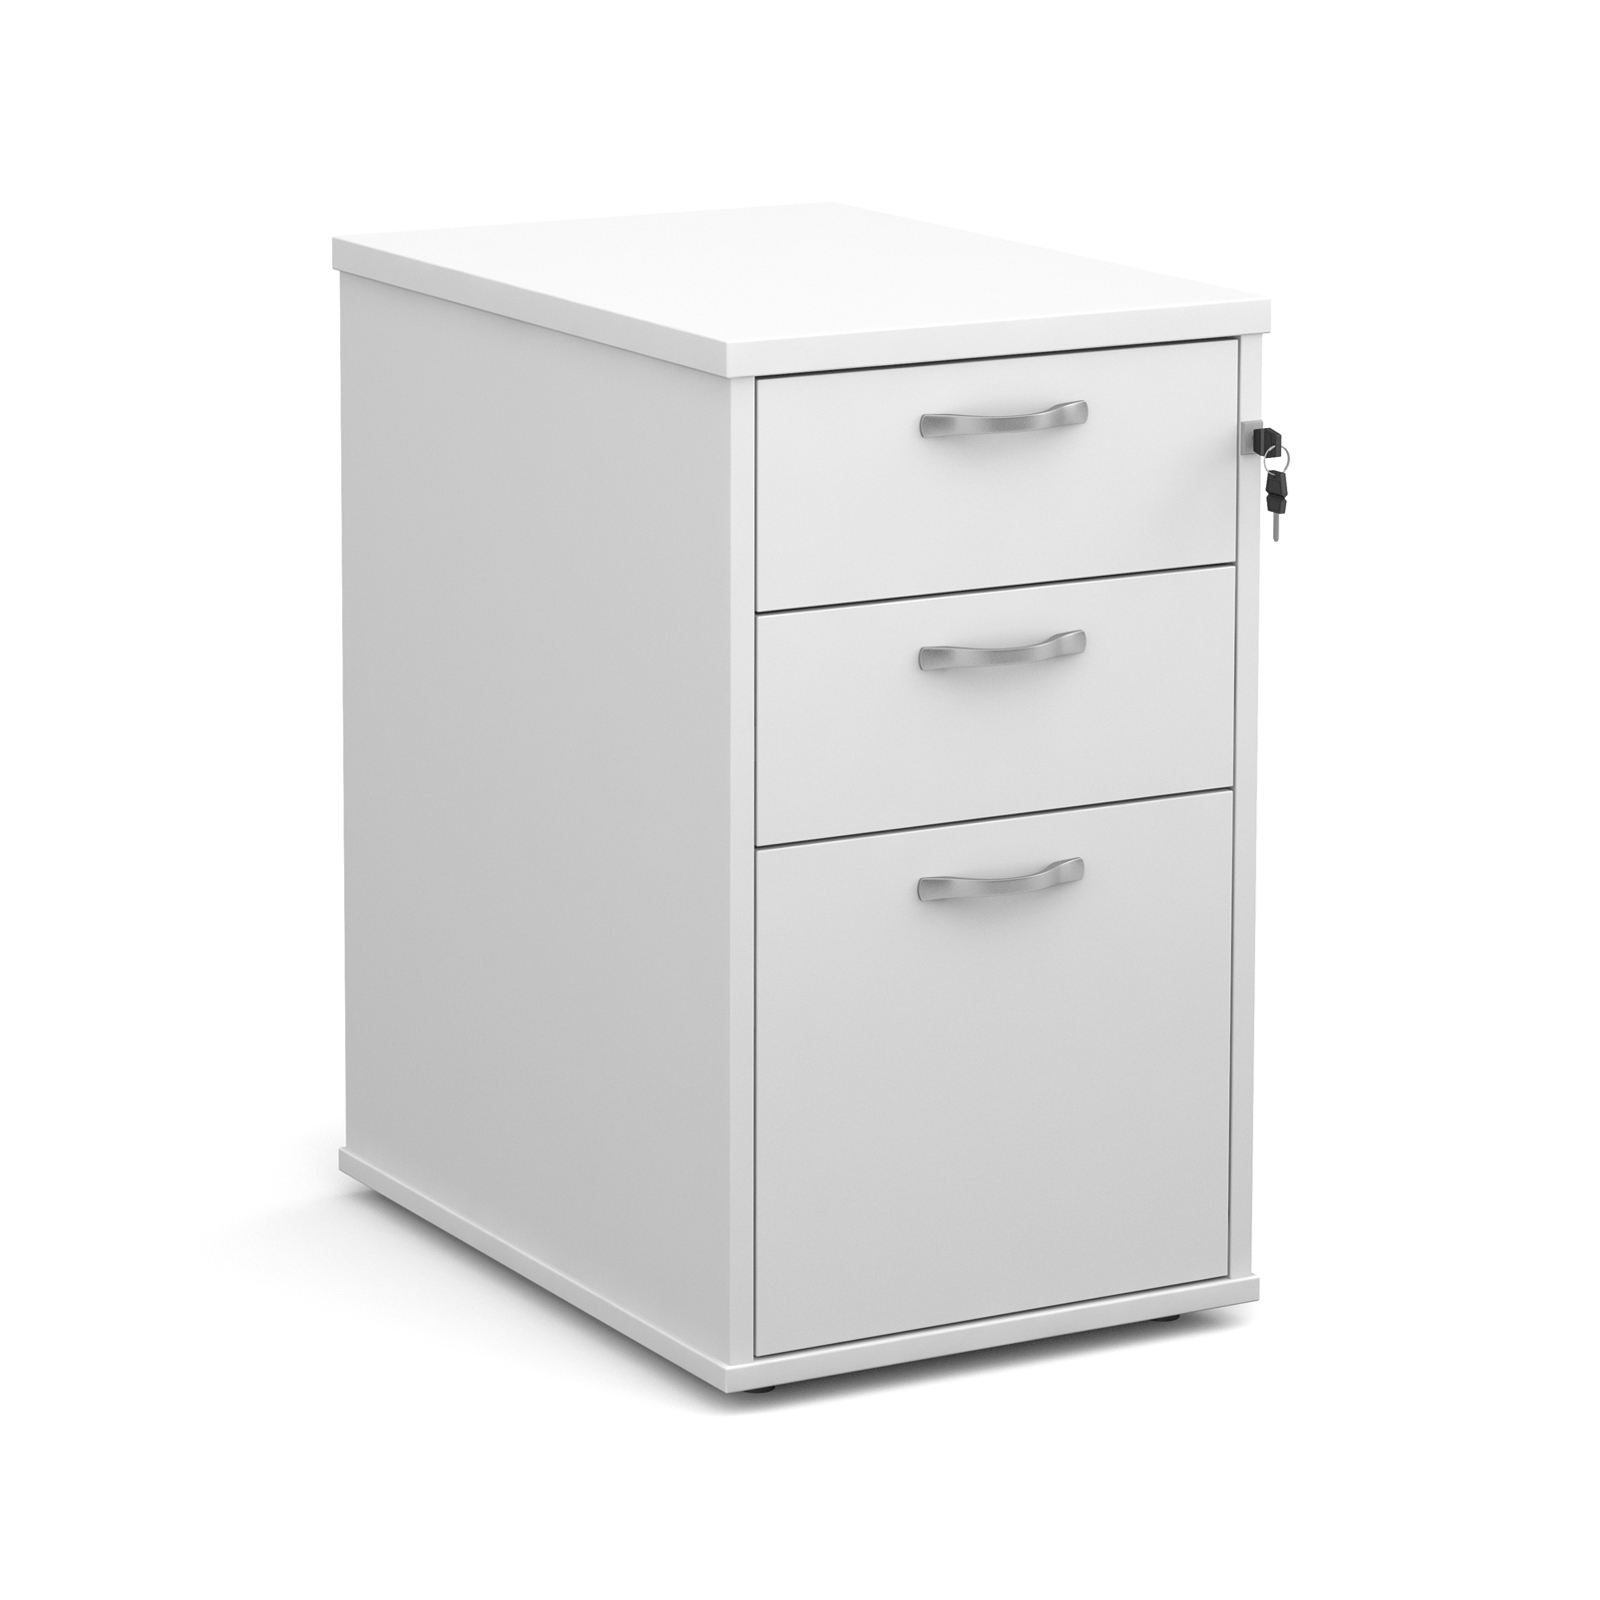 3 Drawer Desk high 3 drawer pedestal with silver handles 600mm deep - white